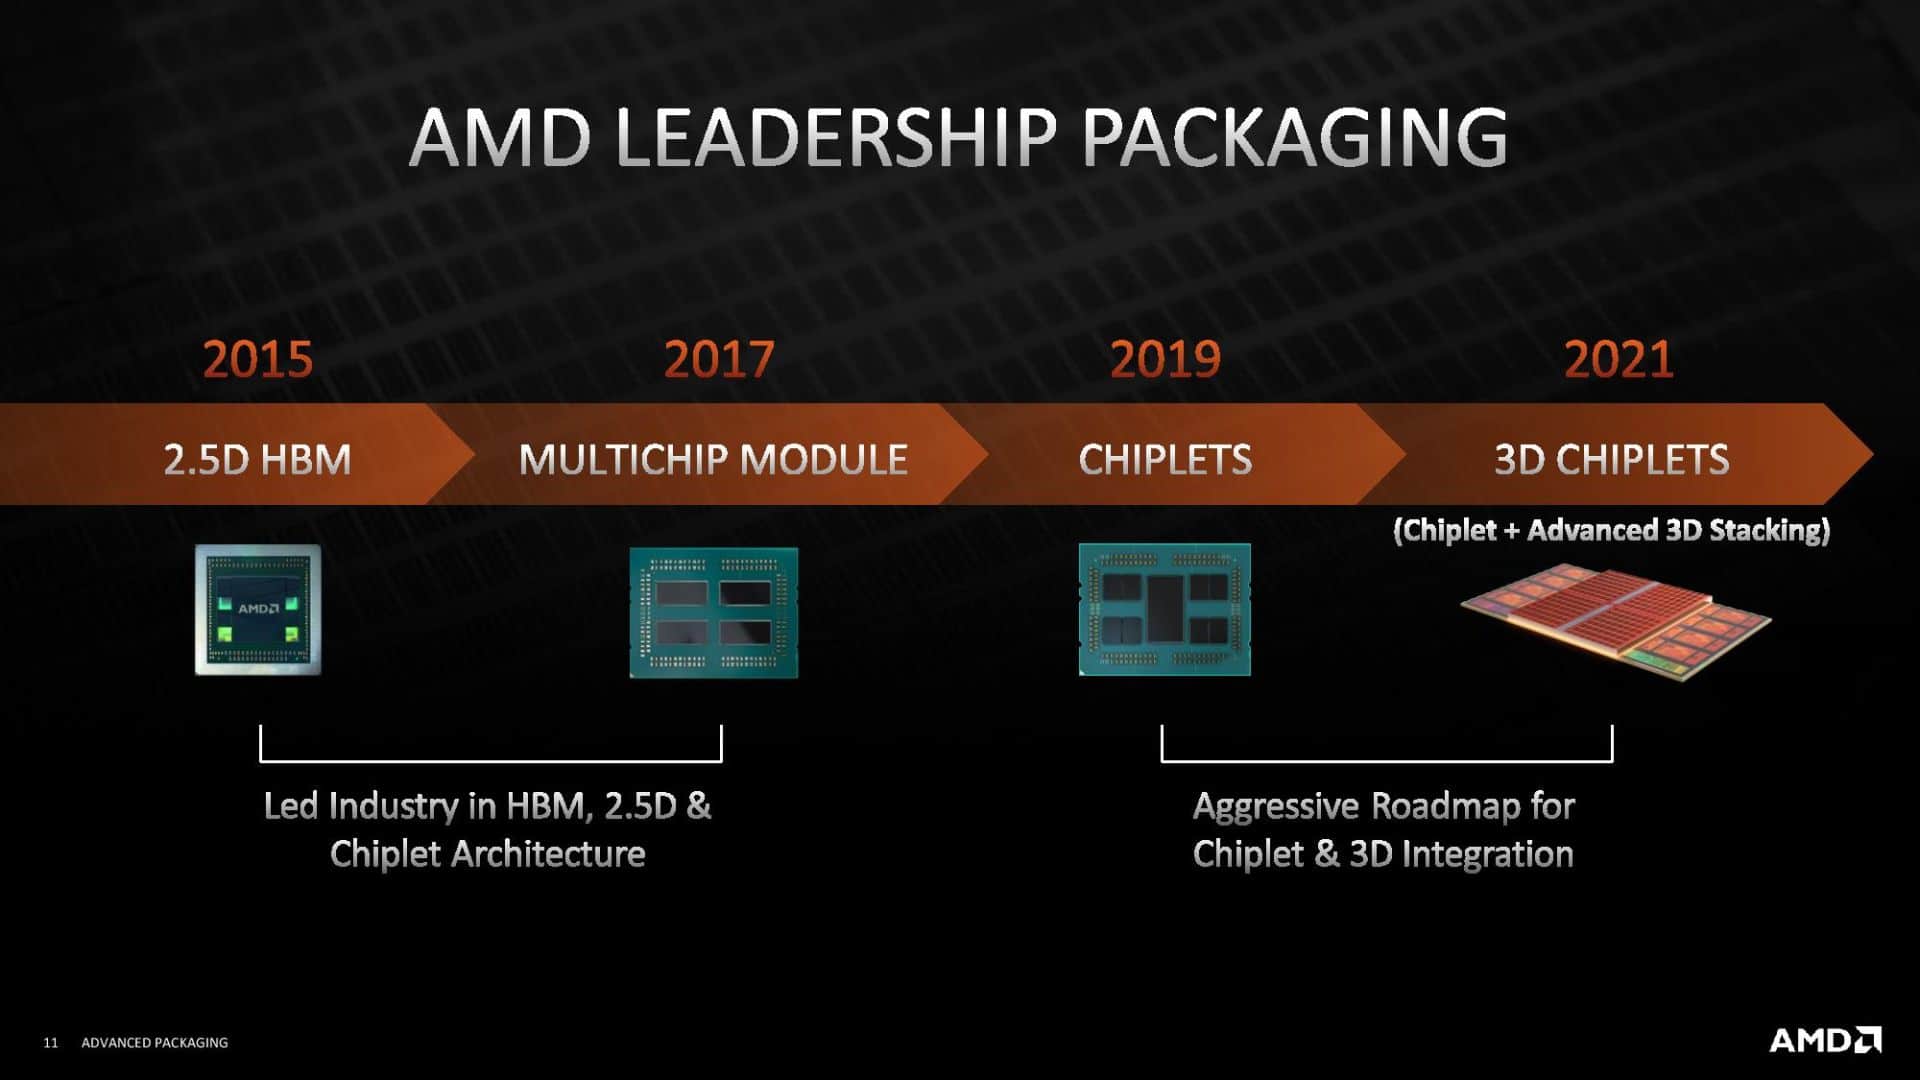 AMD chiplet